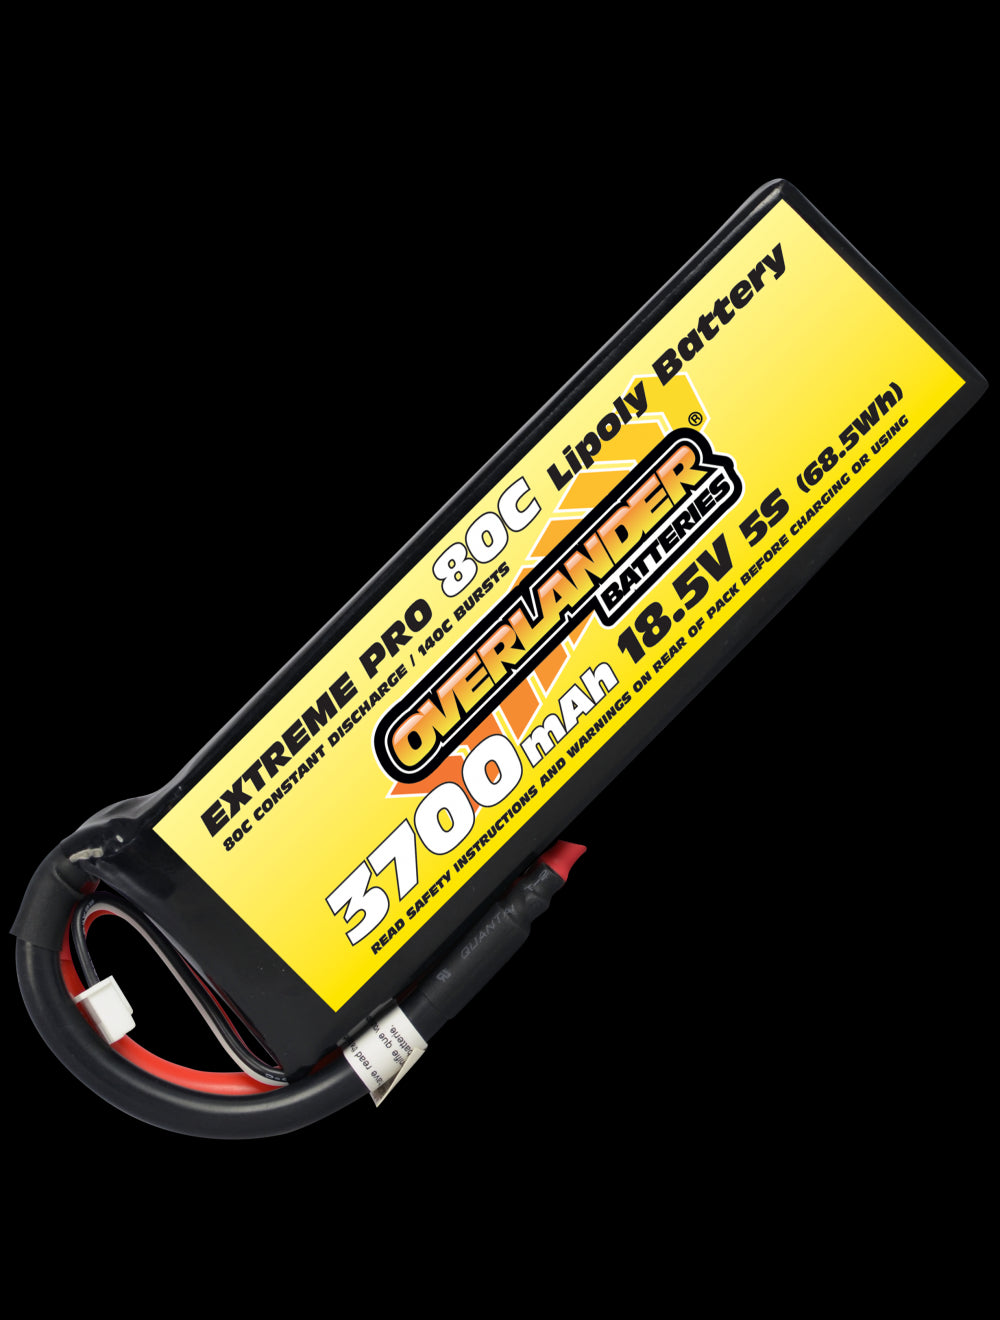 Overlander 3700mAh 18.5V 5S 80C Extreme Pro LiPo Battery - Deans Connector 3108